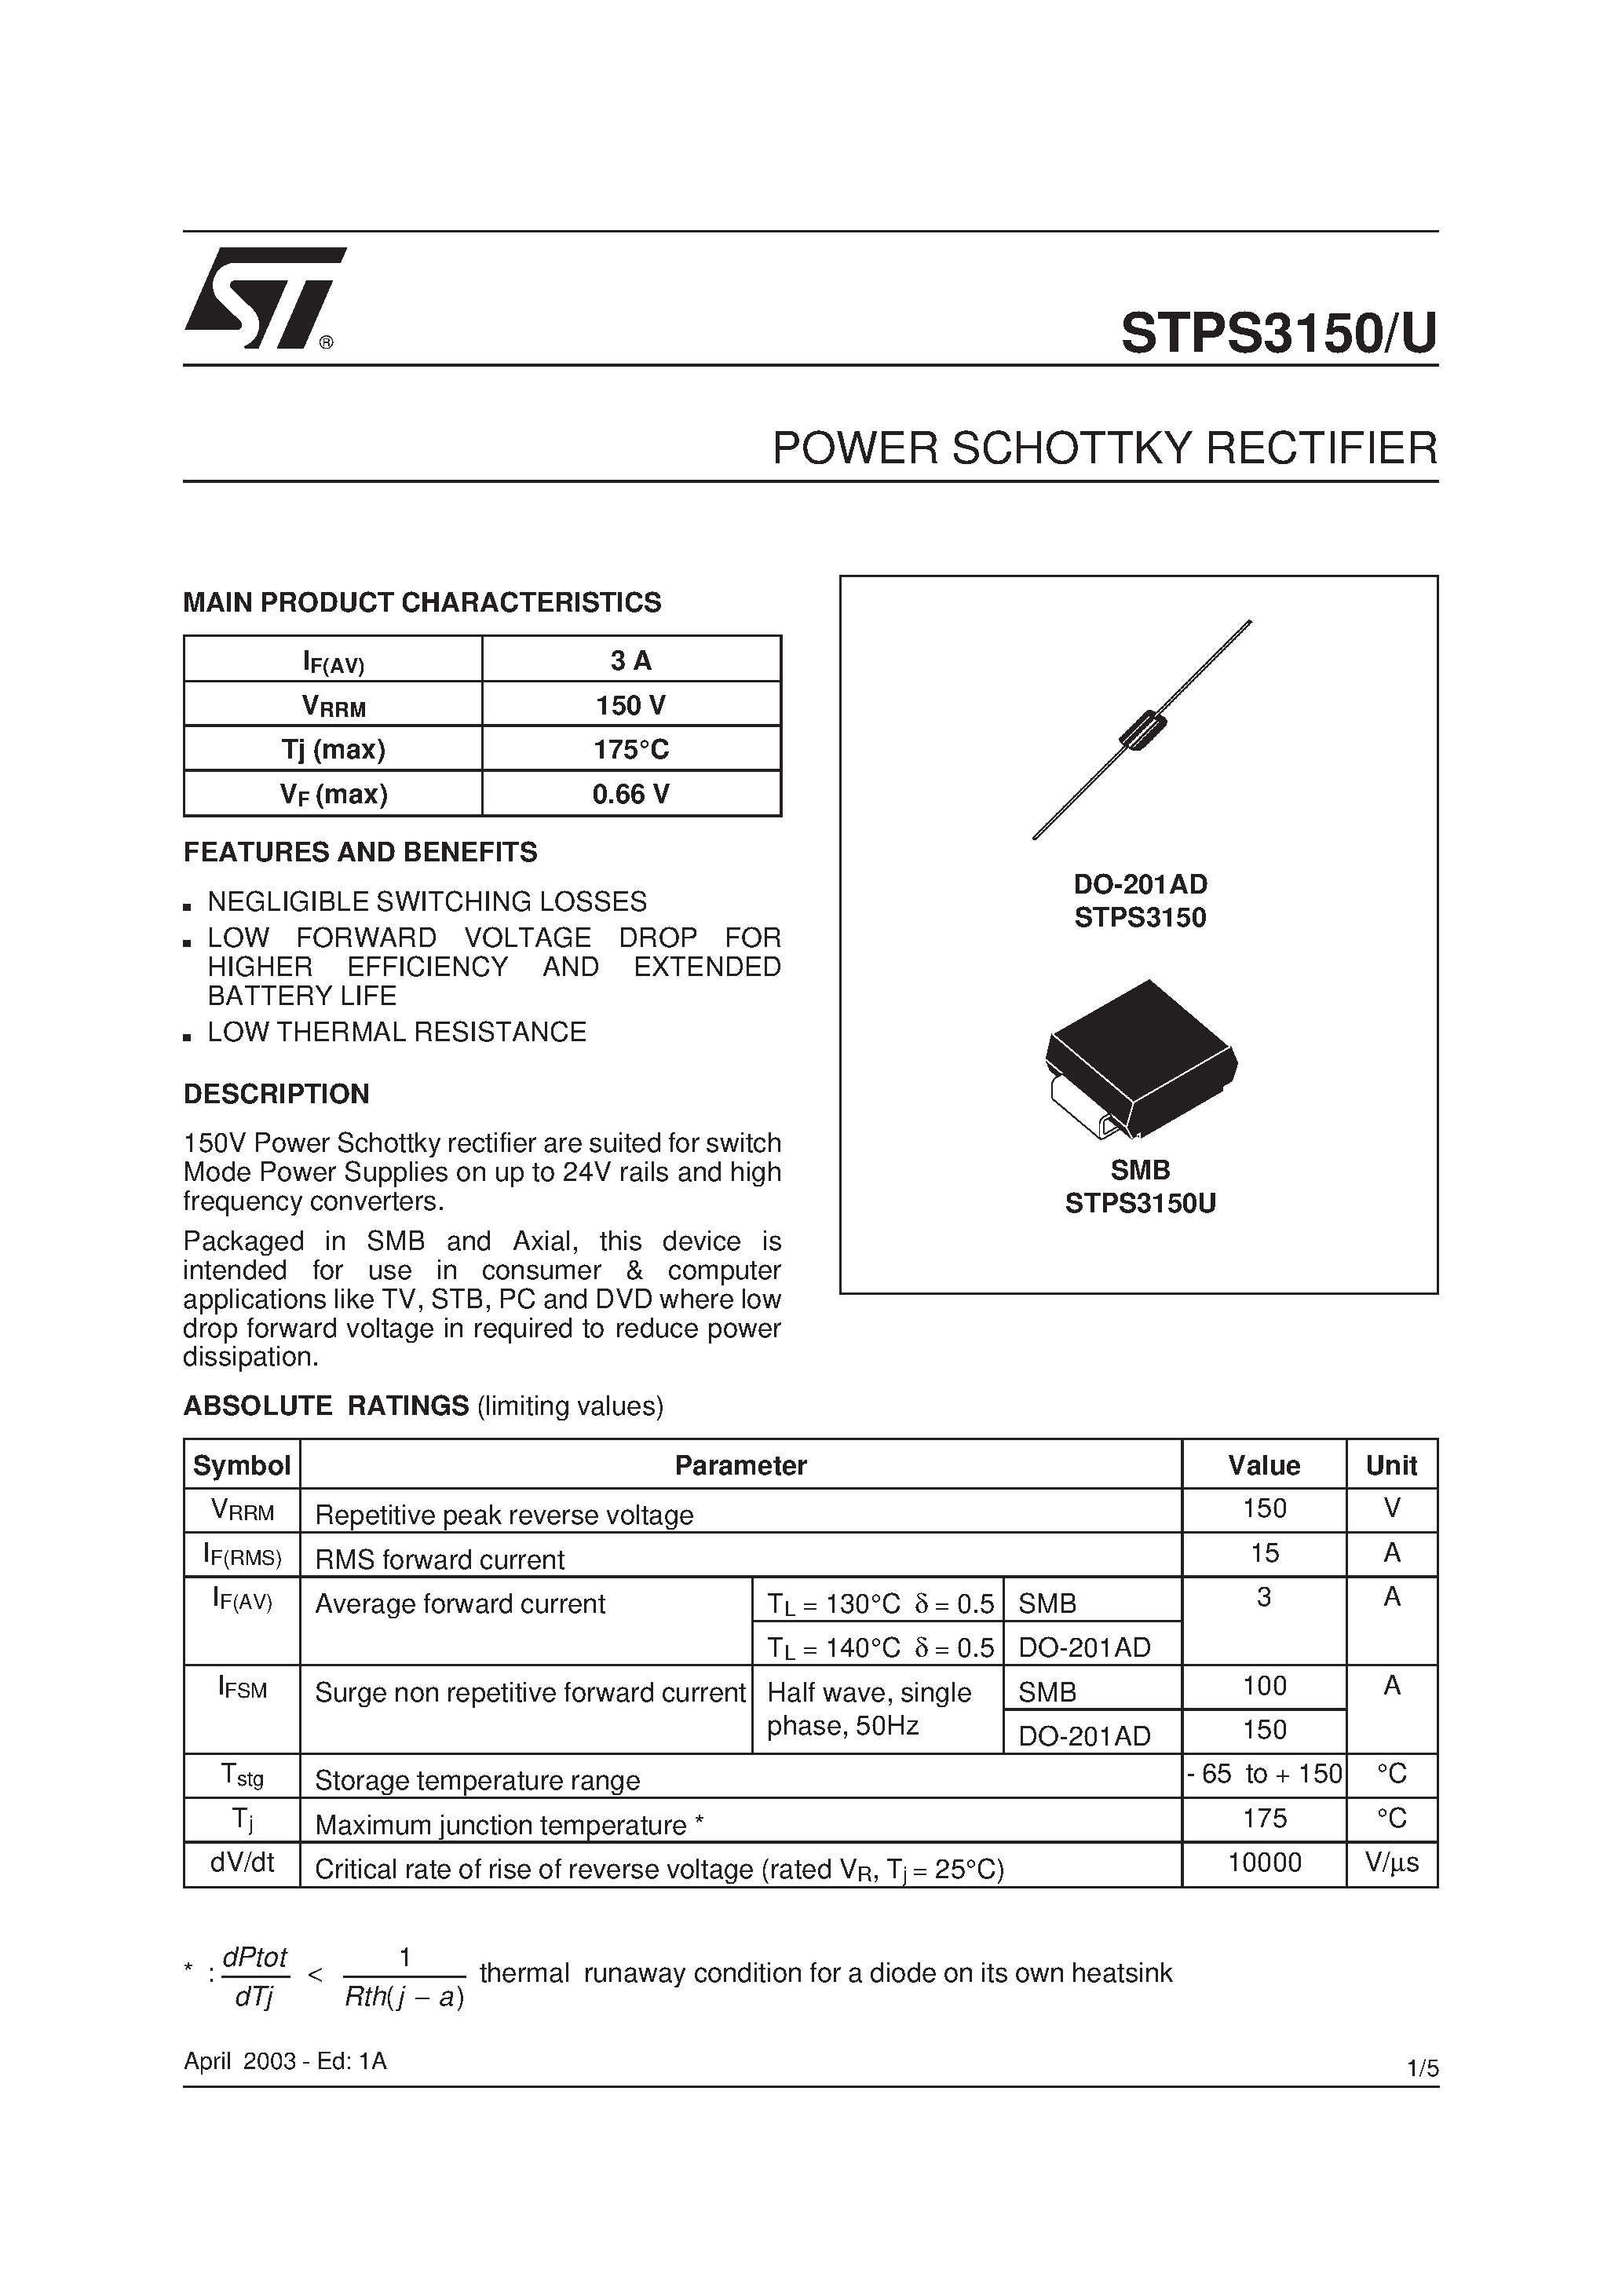 Datasheet STPS3150 - (STPS3150/U) POWER SCHOTTKY RECTIFIER page 1